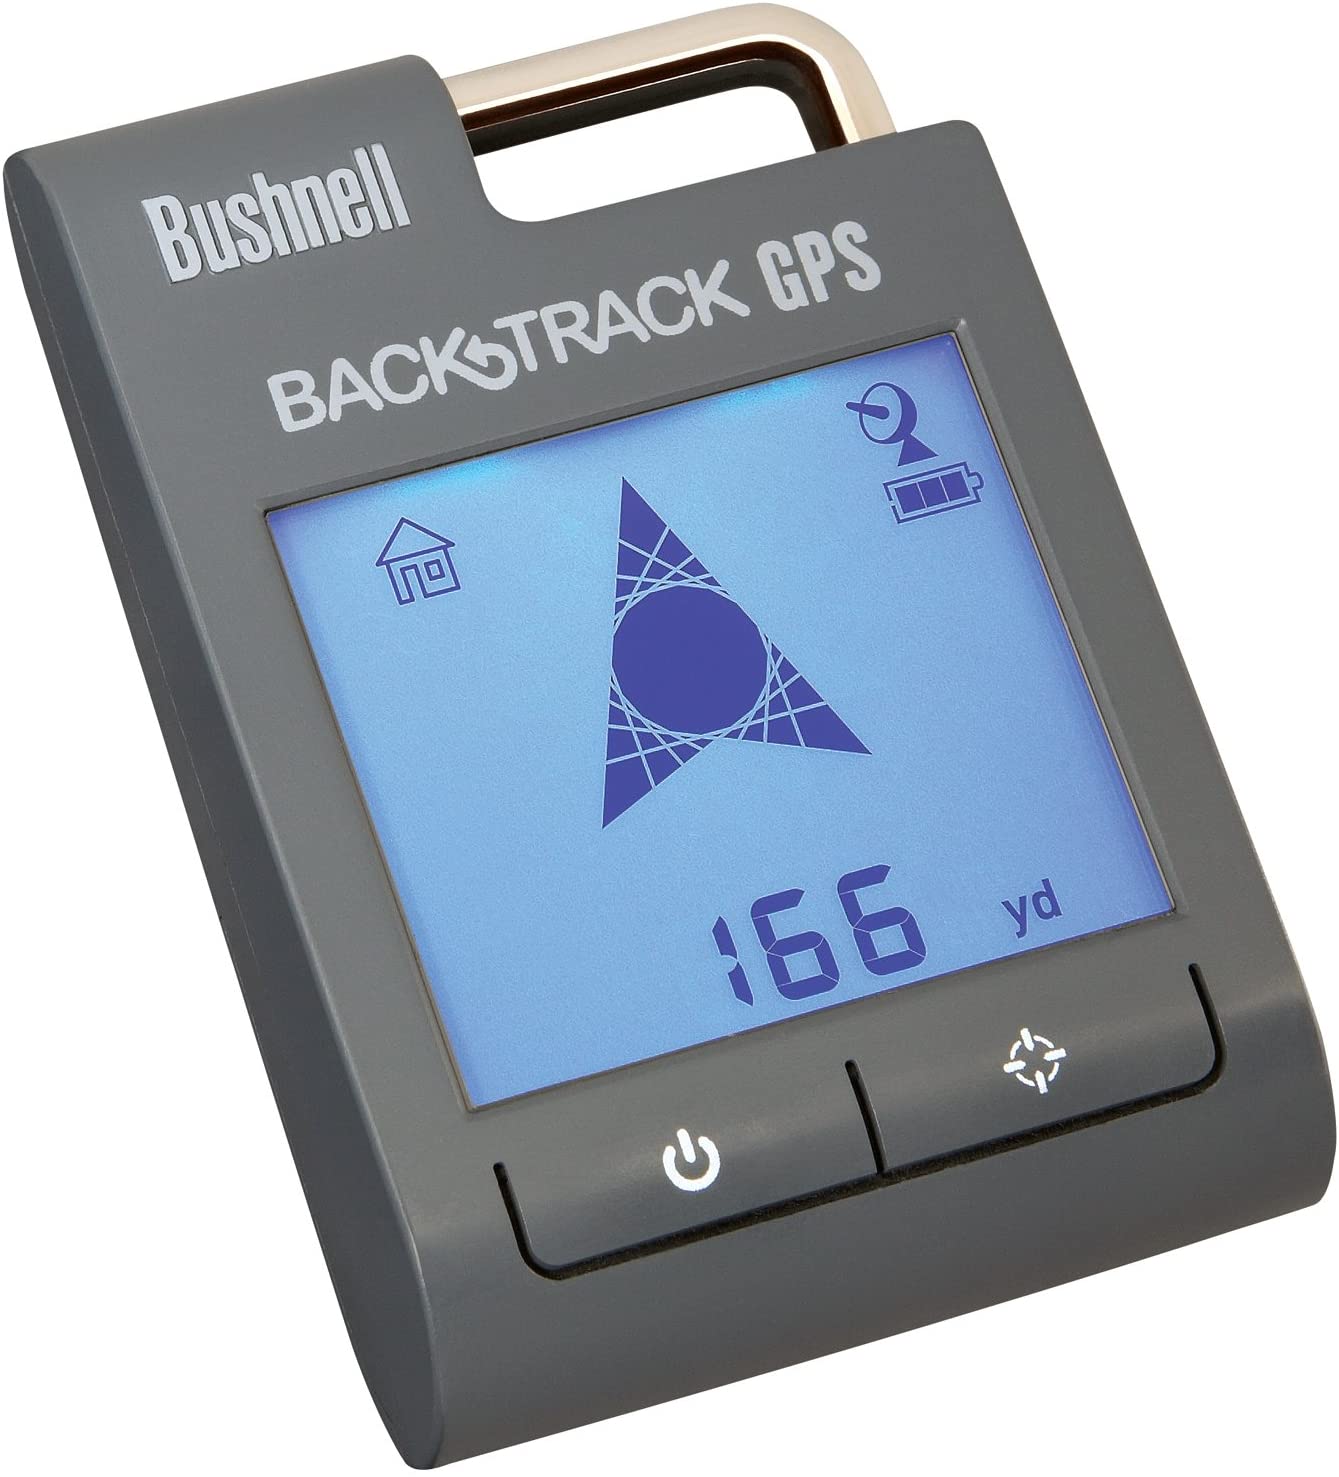 Bushnell Releases Backtrack, simplest GPS Yet!